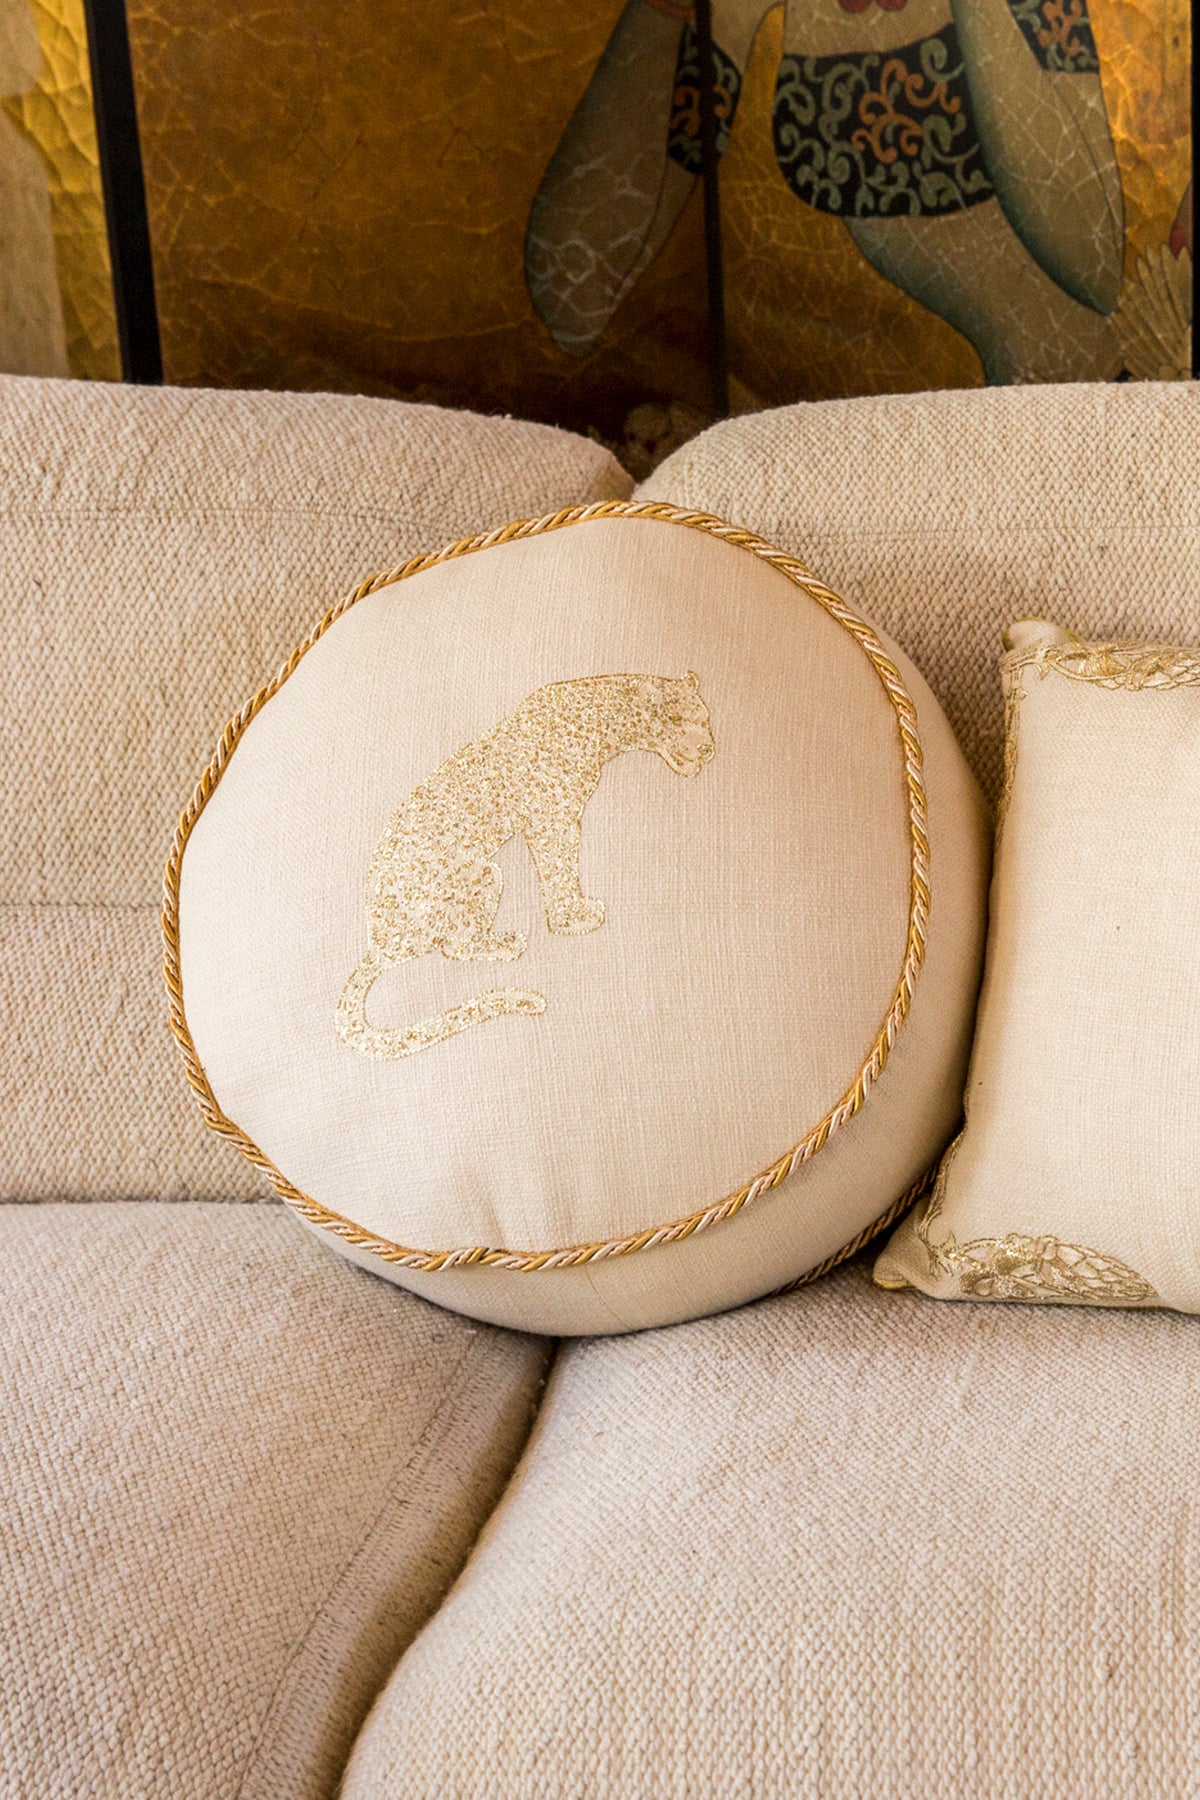 Desert Animal Embroidered Round Pillow - Carolina K